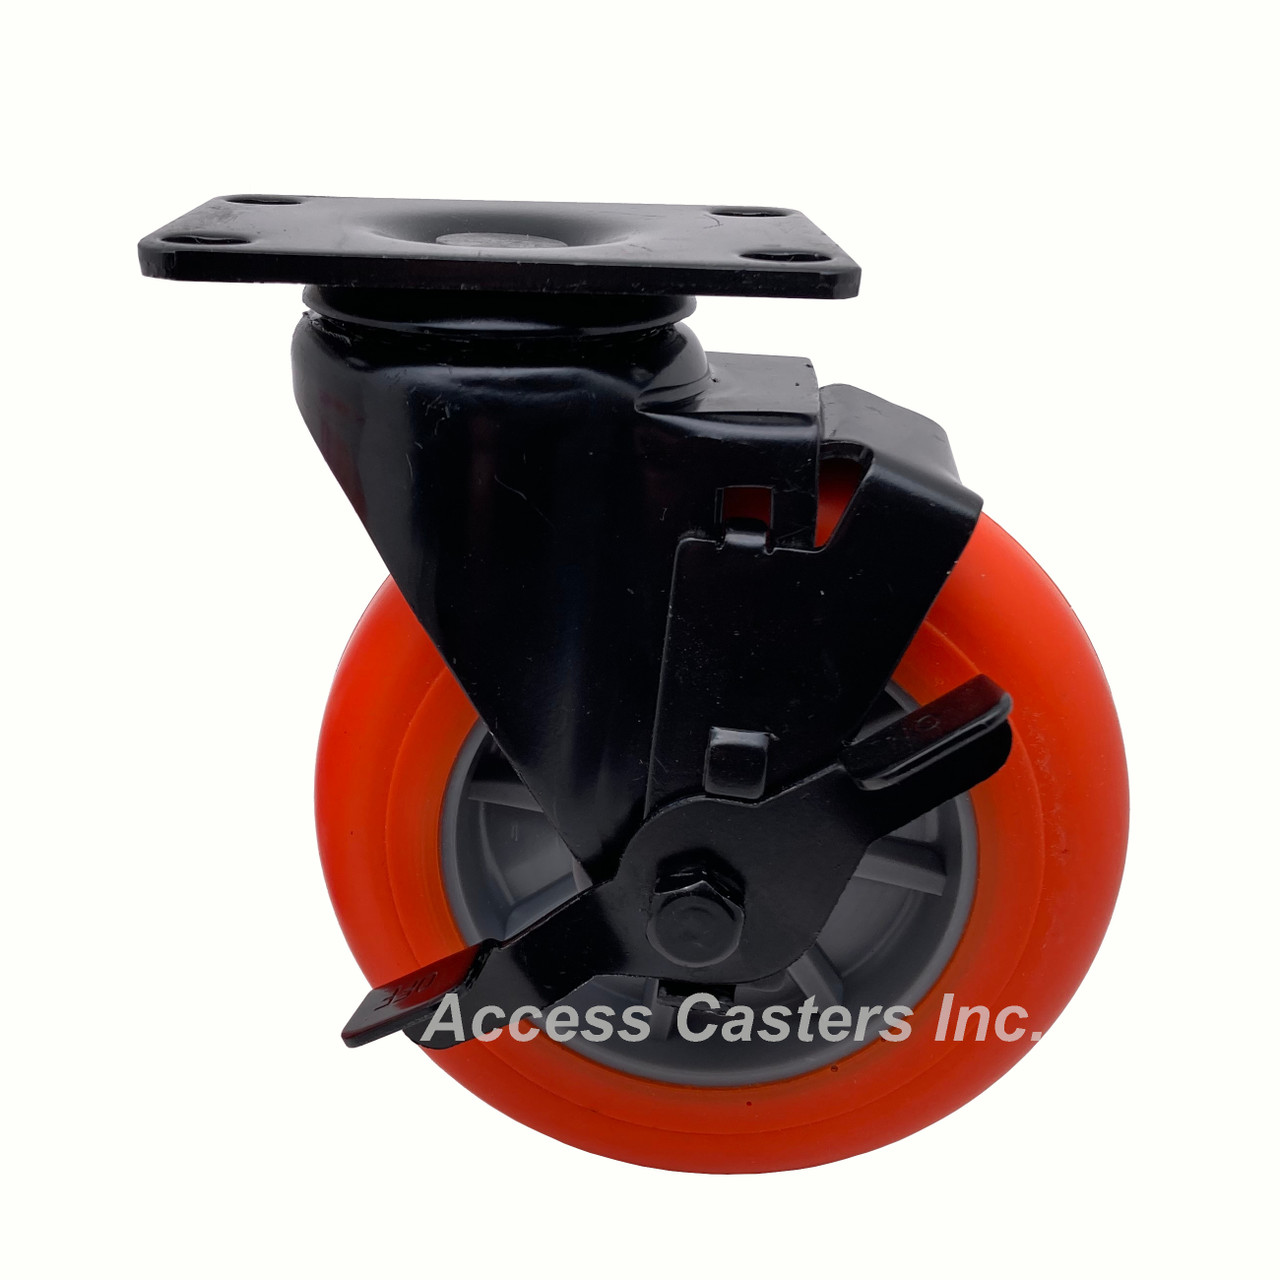 5" ergonomic swivel caster with brake, black finish